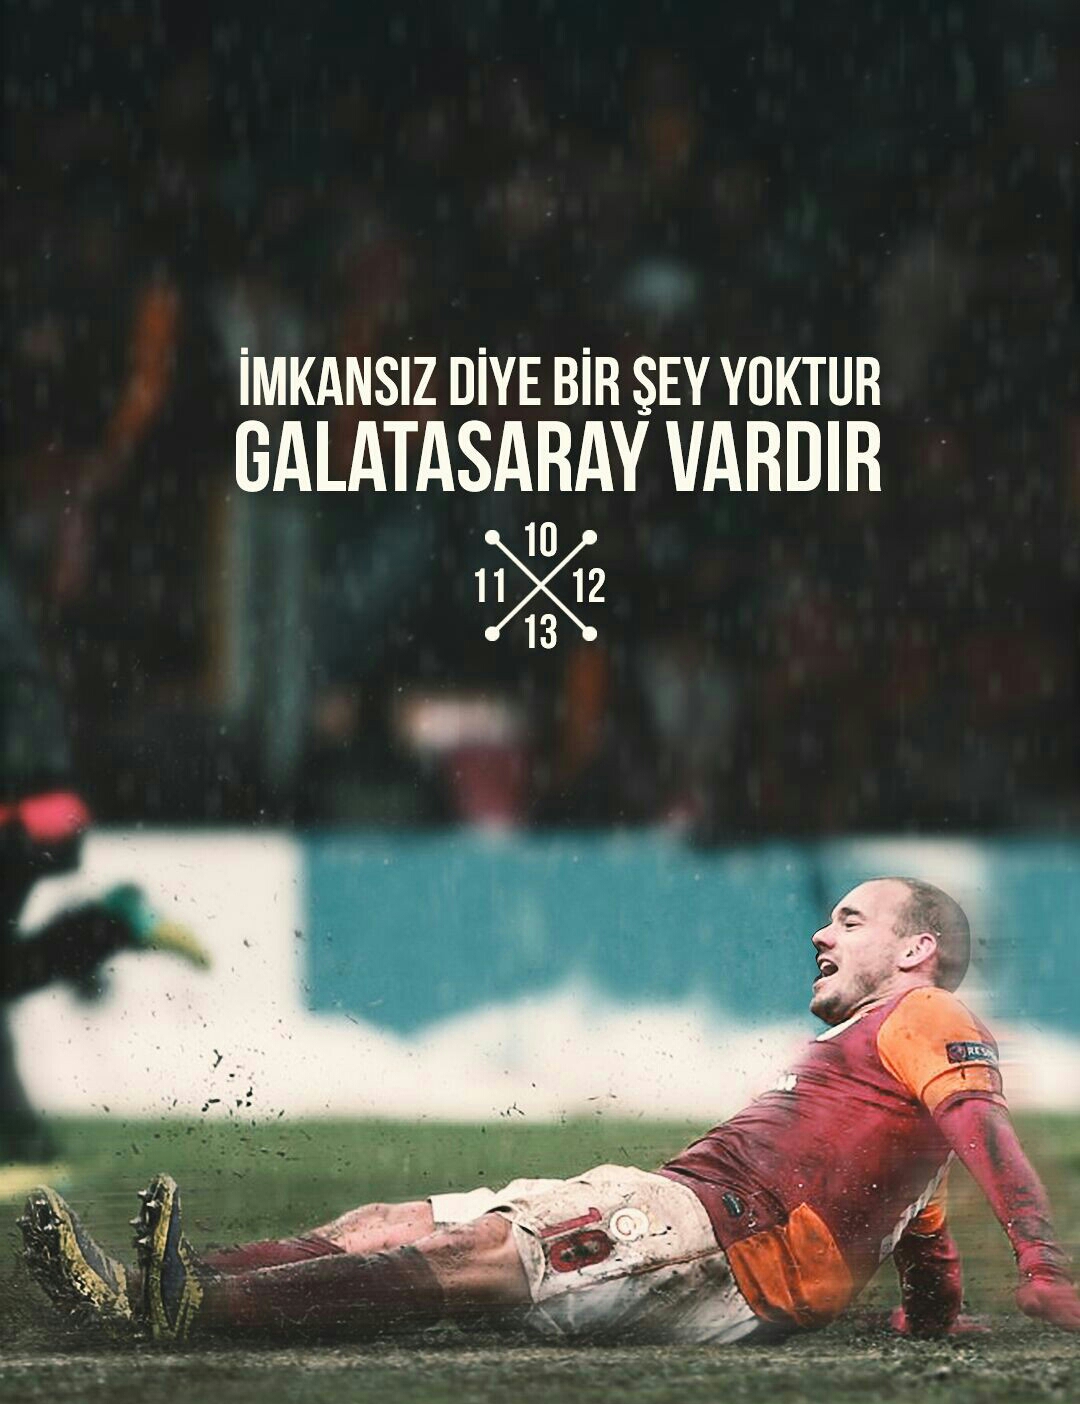 Galatasaray sözleri 